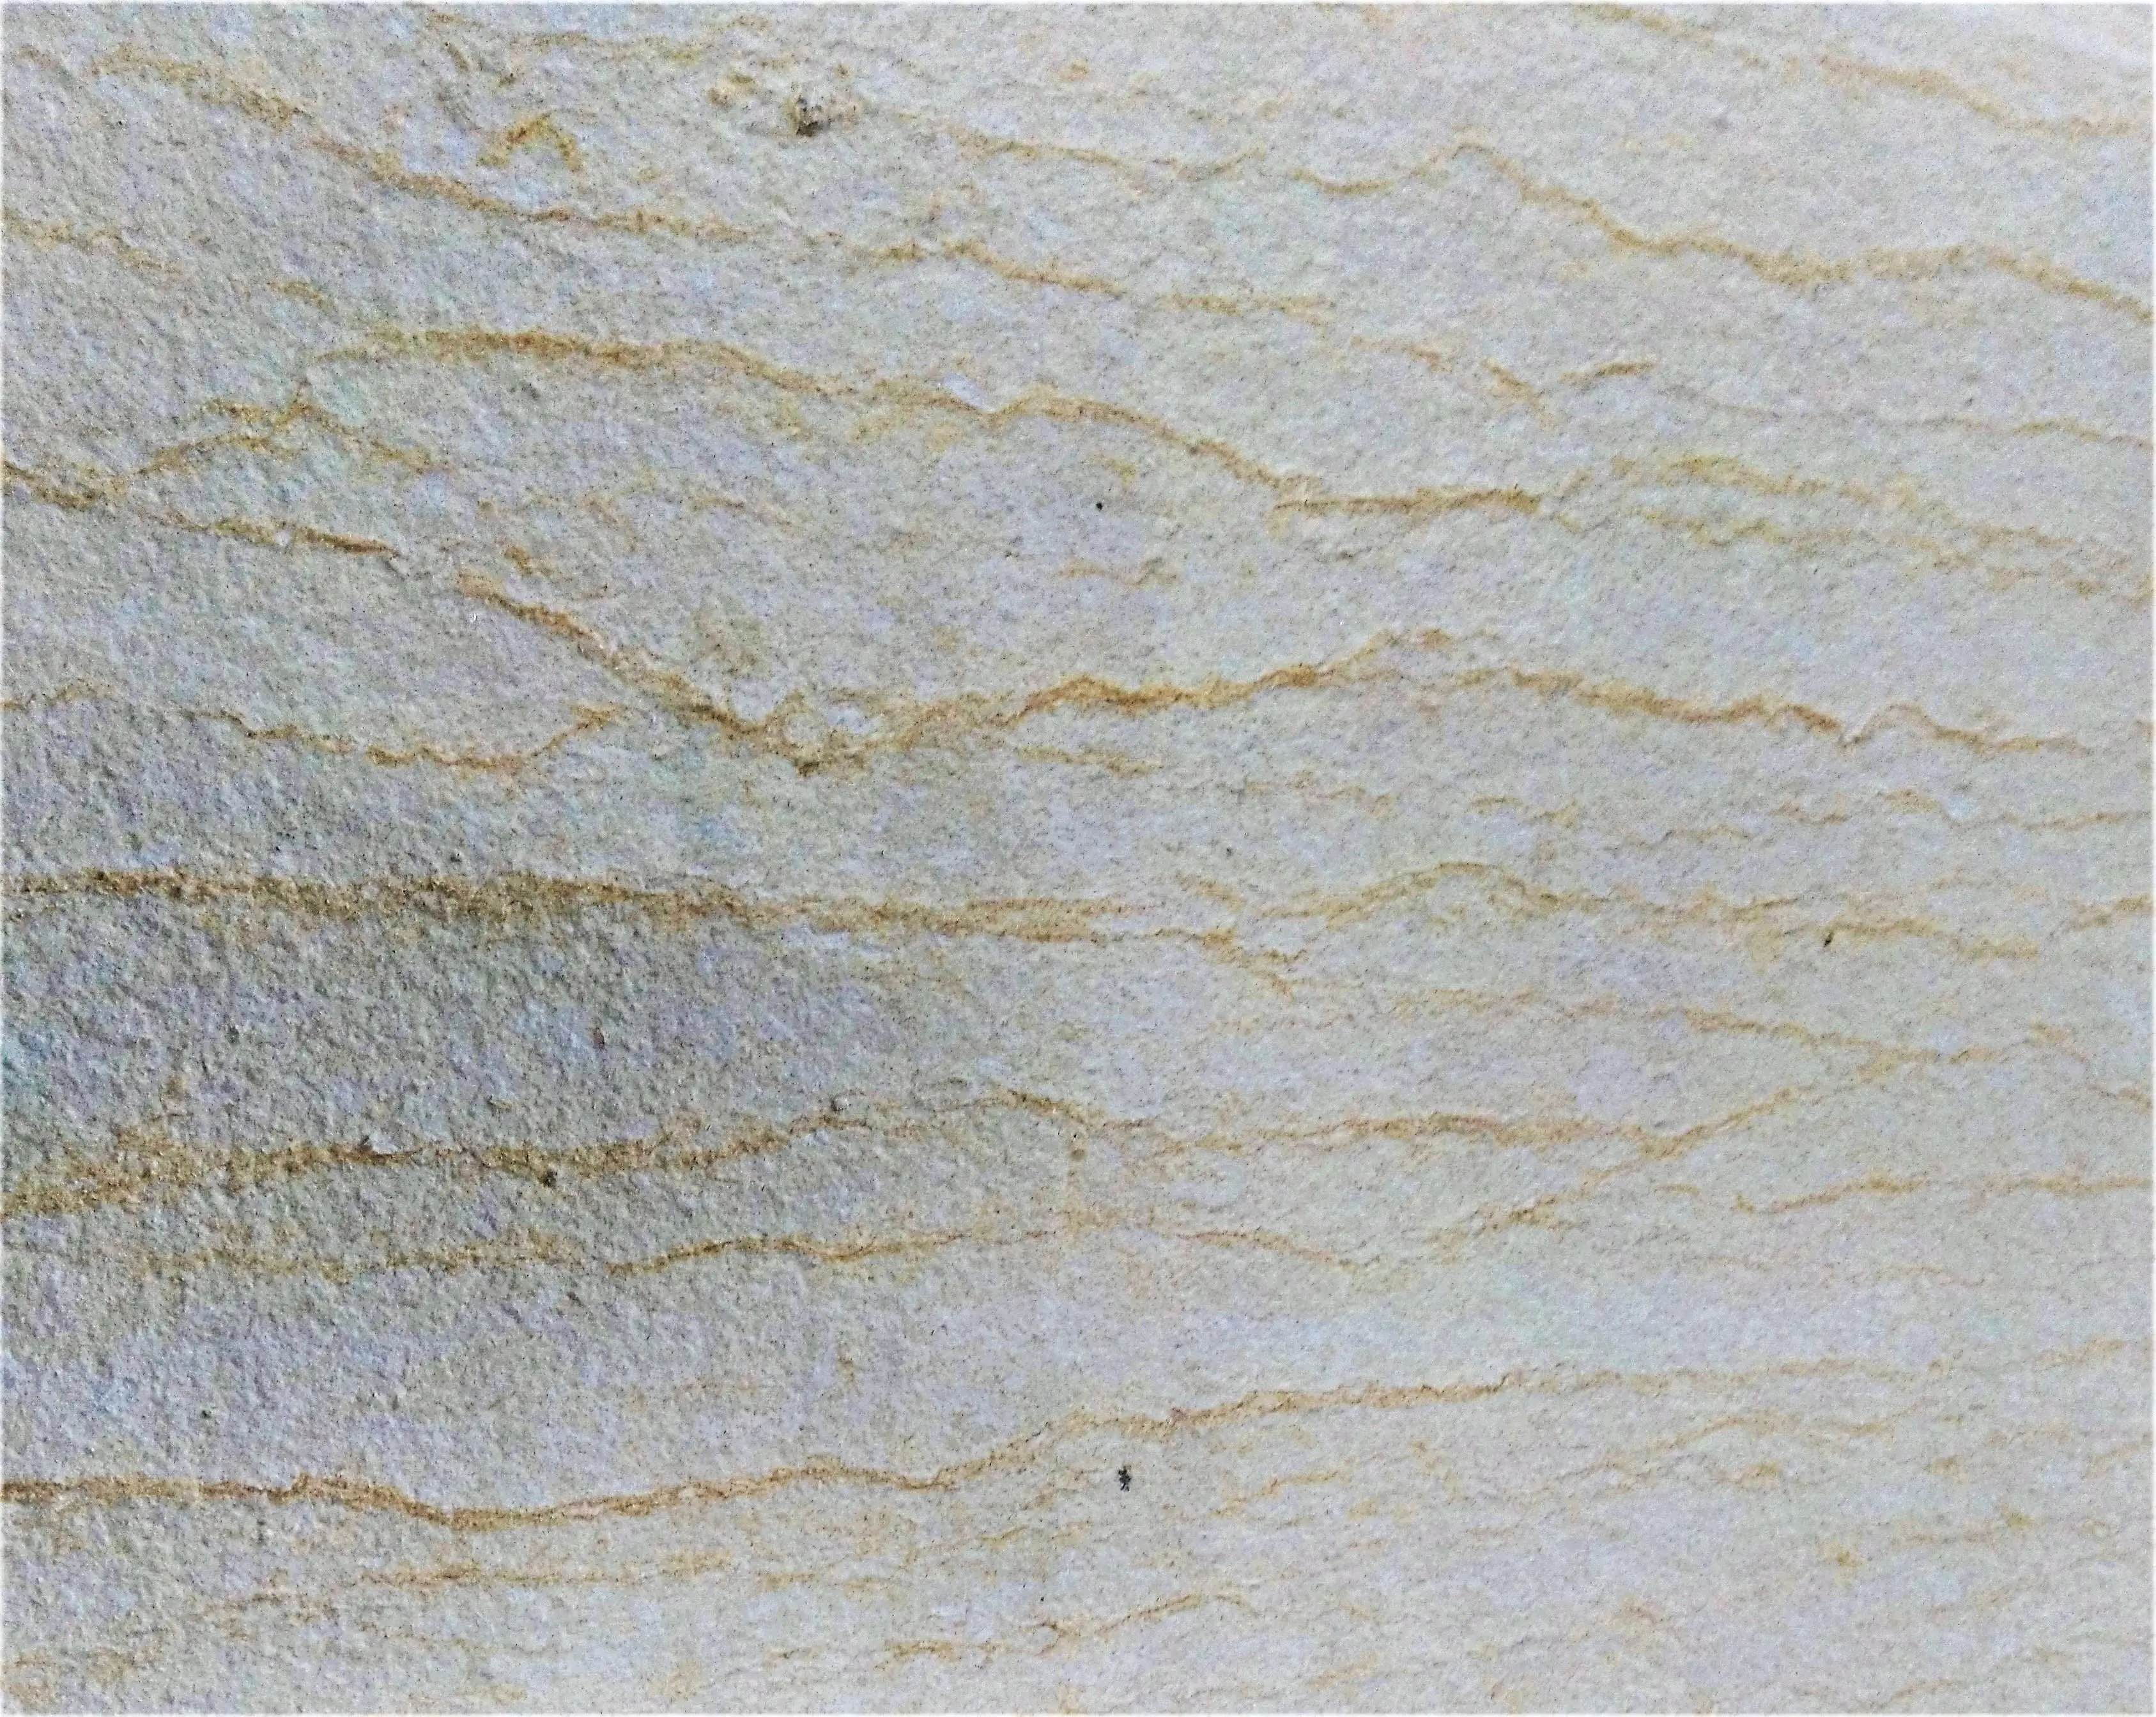 SILVIA Lembaran Pelapis Batu Marmer Fleksibel, Dekorasi Dinding Eksterior Interior Fleksibel 2 Mm Batu Alami Tipis Asli